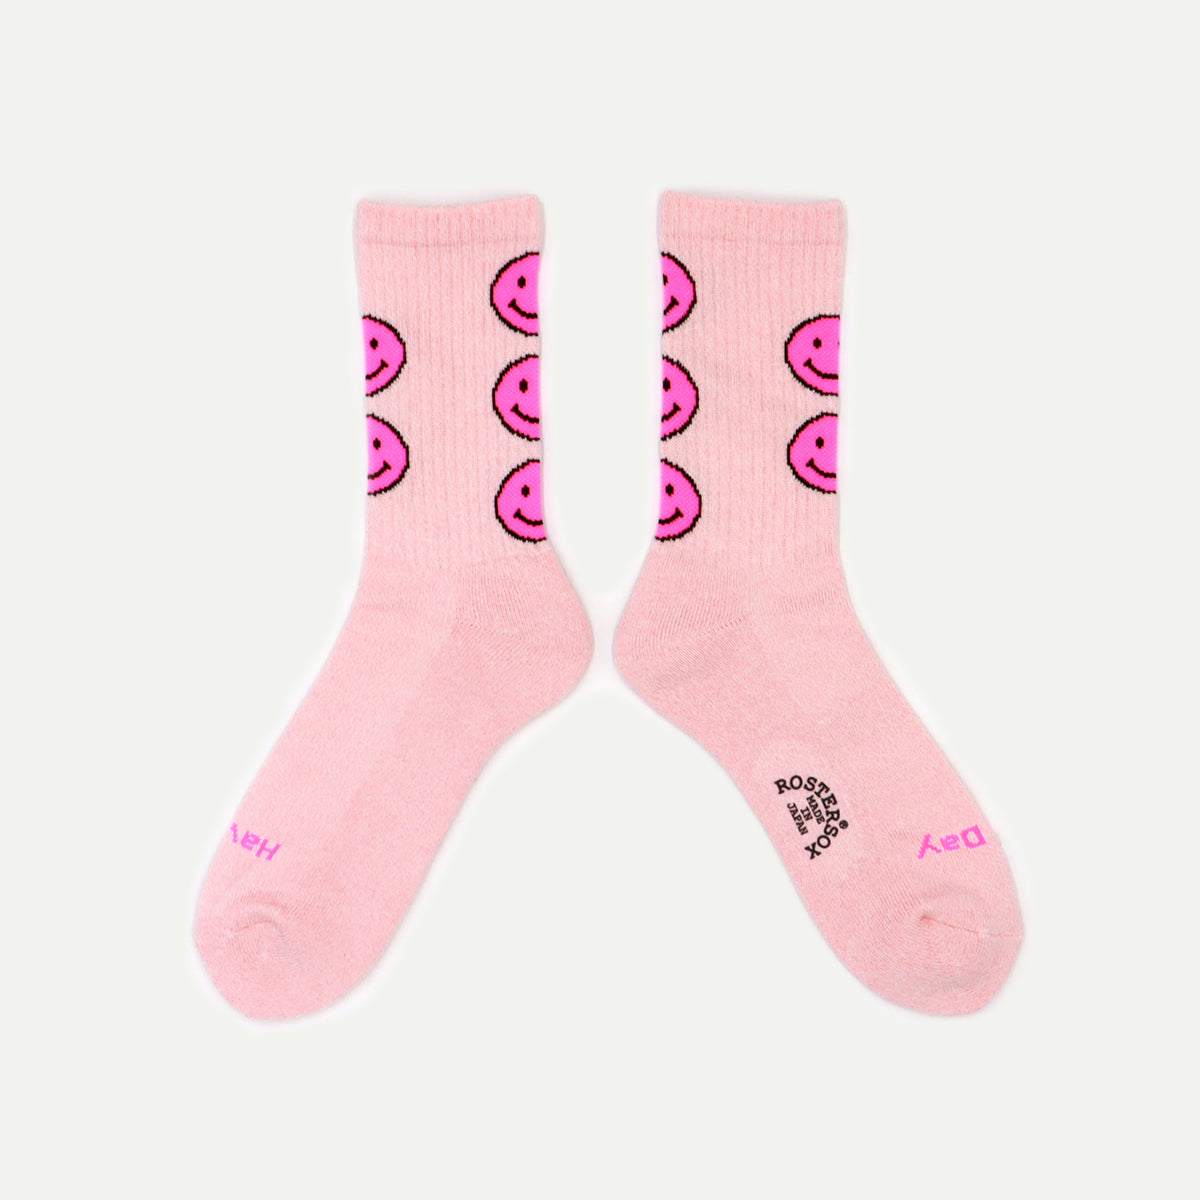 Rostersox Pink SSS Socks